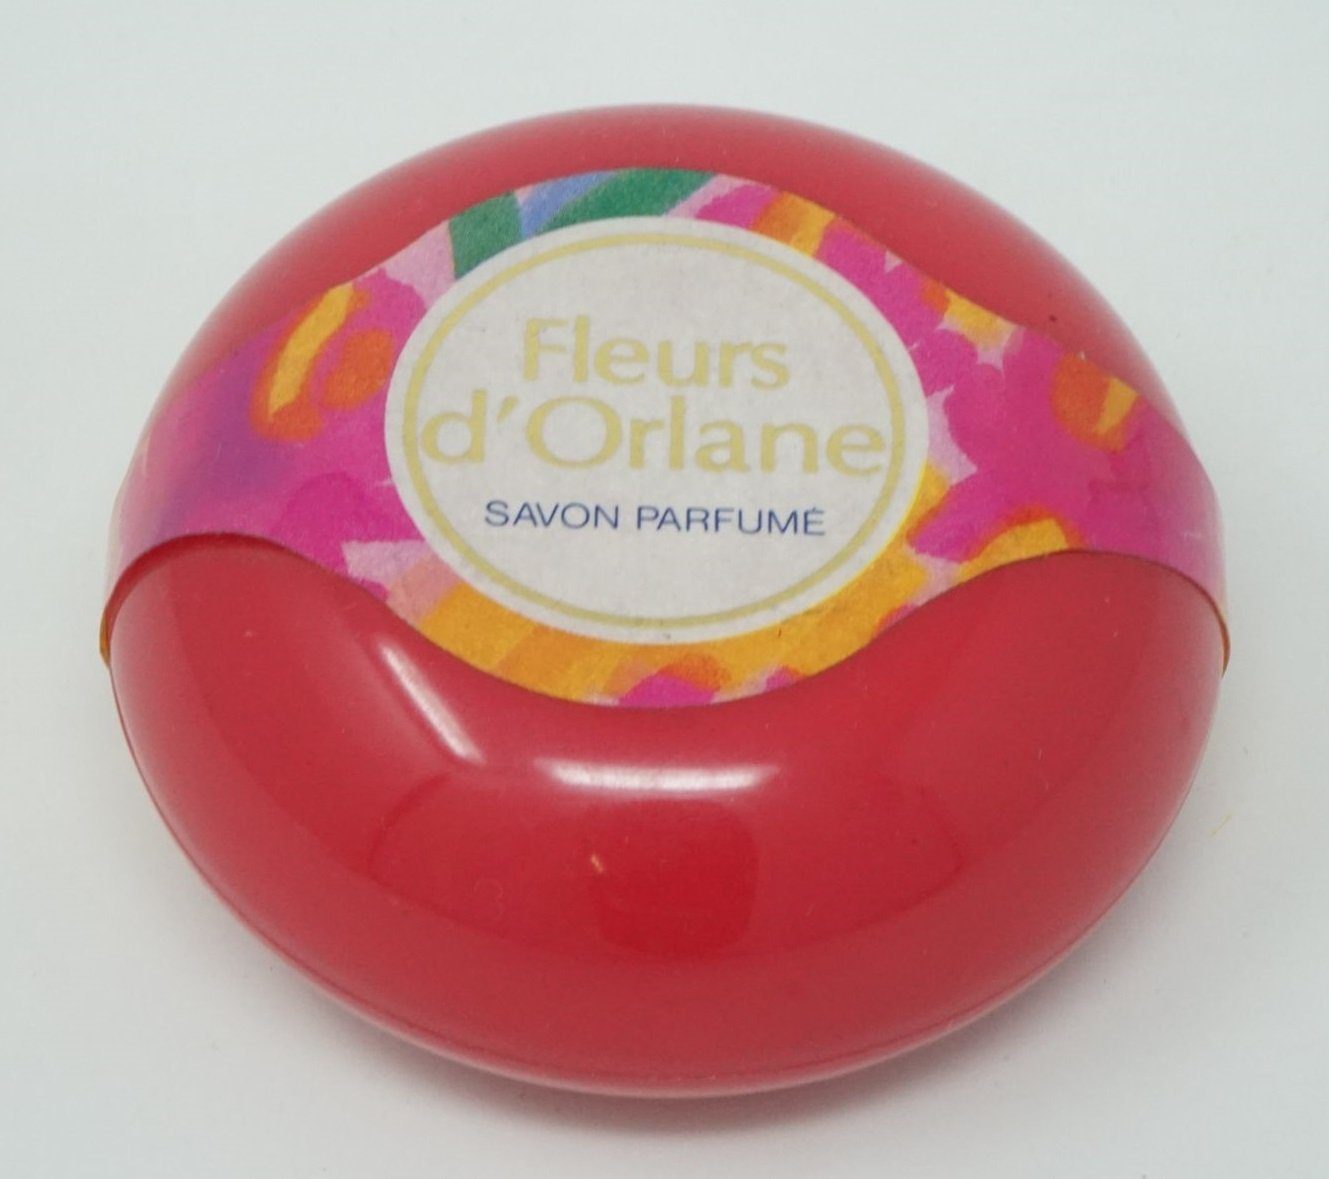 Perfumed Handseife 100 Orlane g Soap Fleurs Orlane d'Orlane Seife